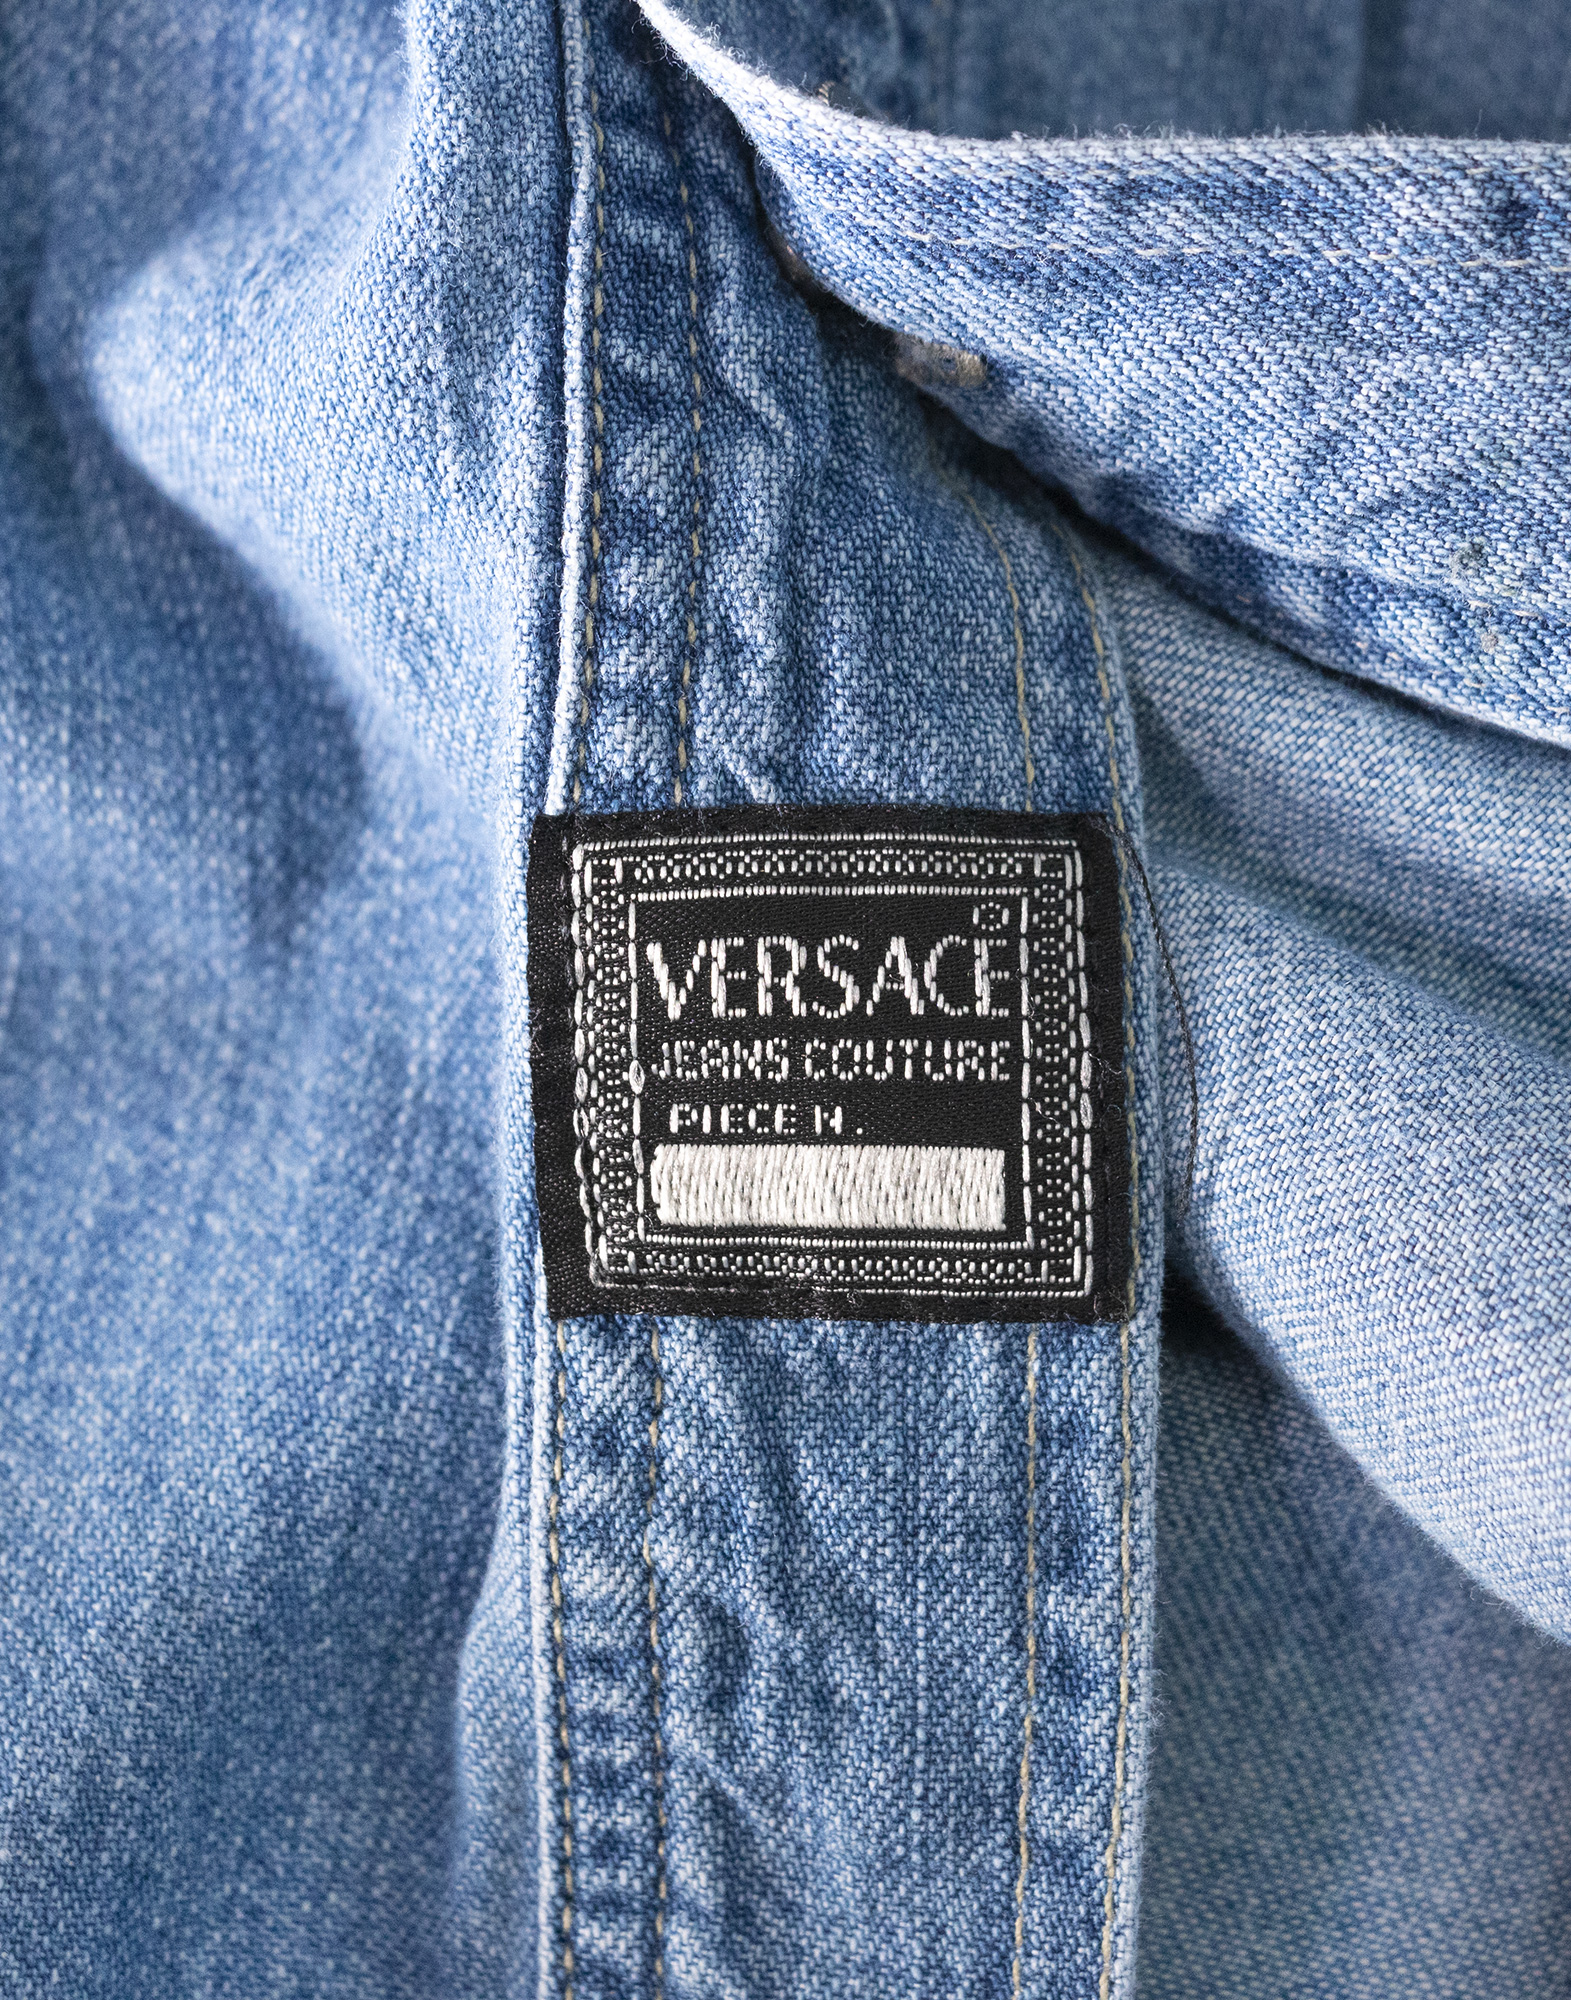 Versace Jeans Couture - 90s denim man shirt